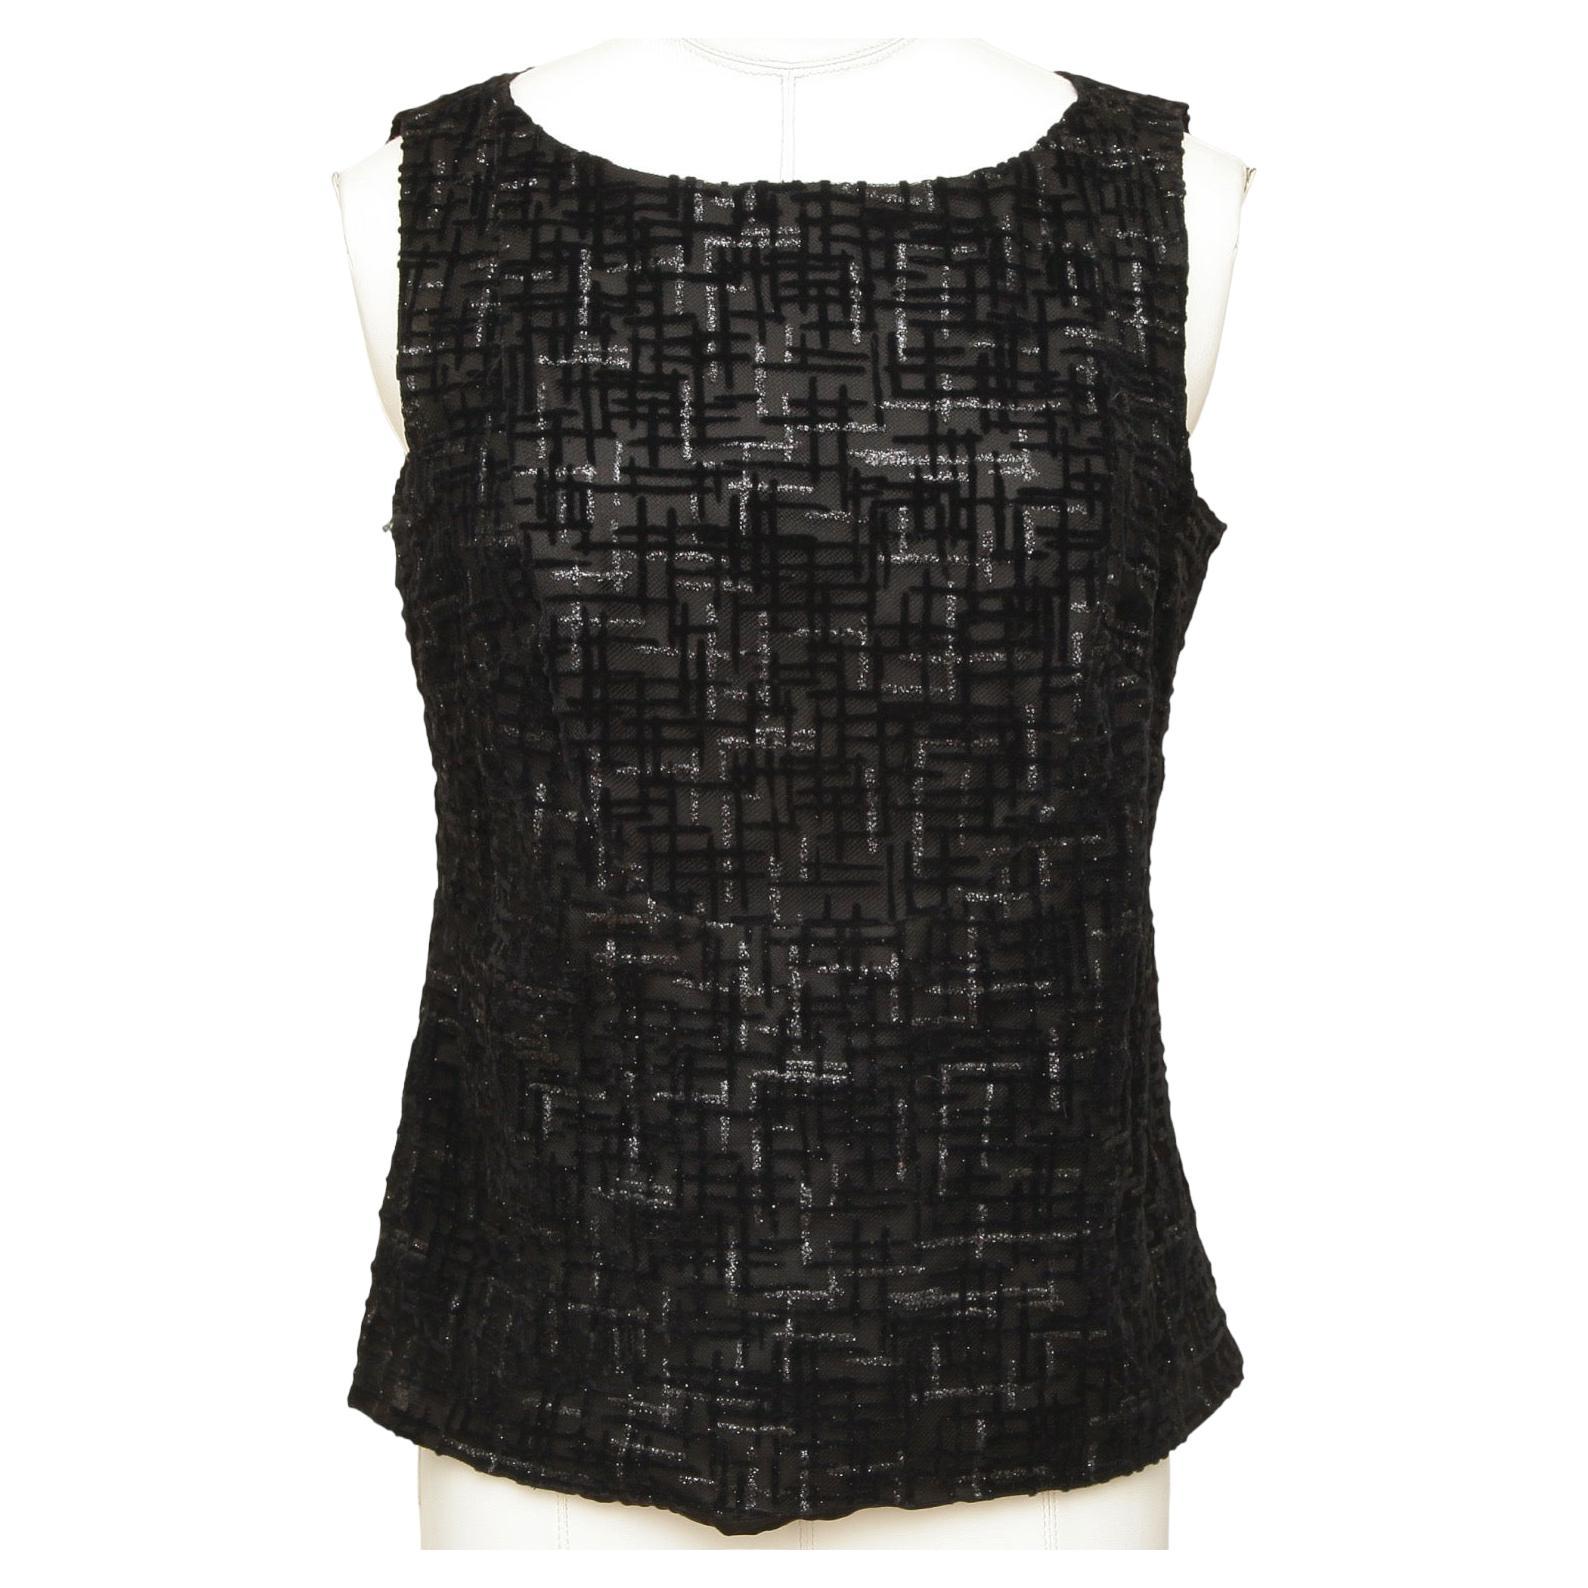 CHANEL Blouse Top Shirt Black Sleeveless CC Button Sz 34 12P 2012 NWT $2190 For Sale